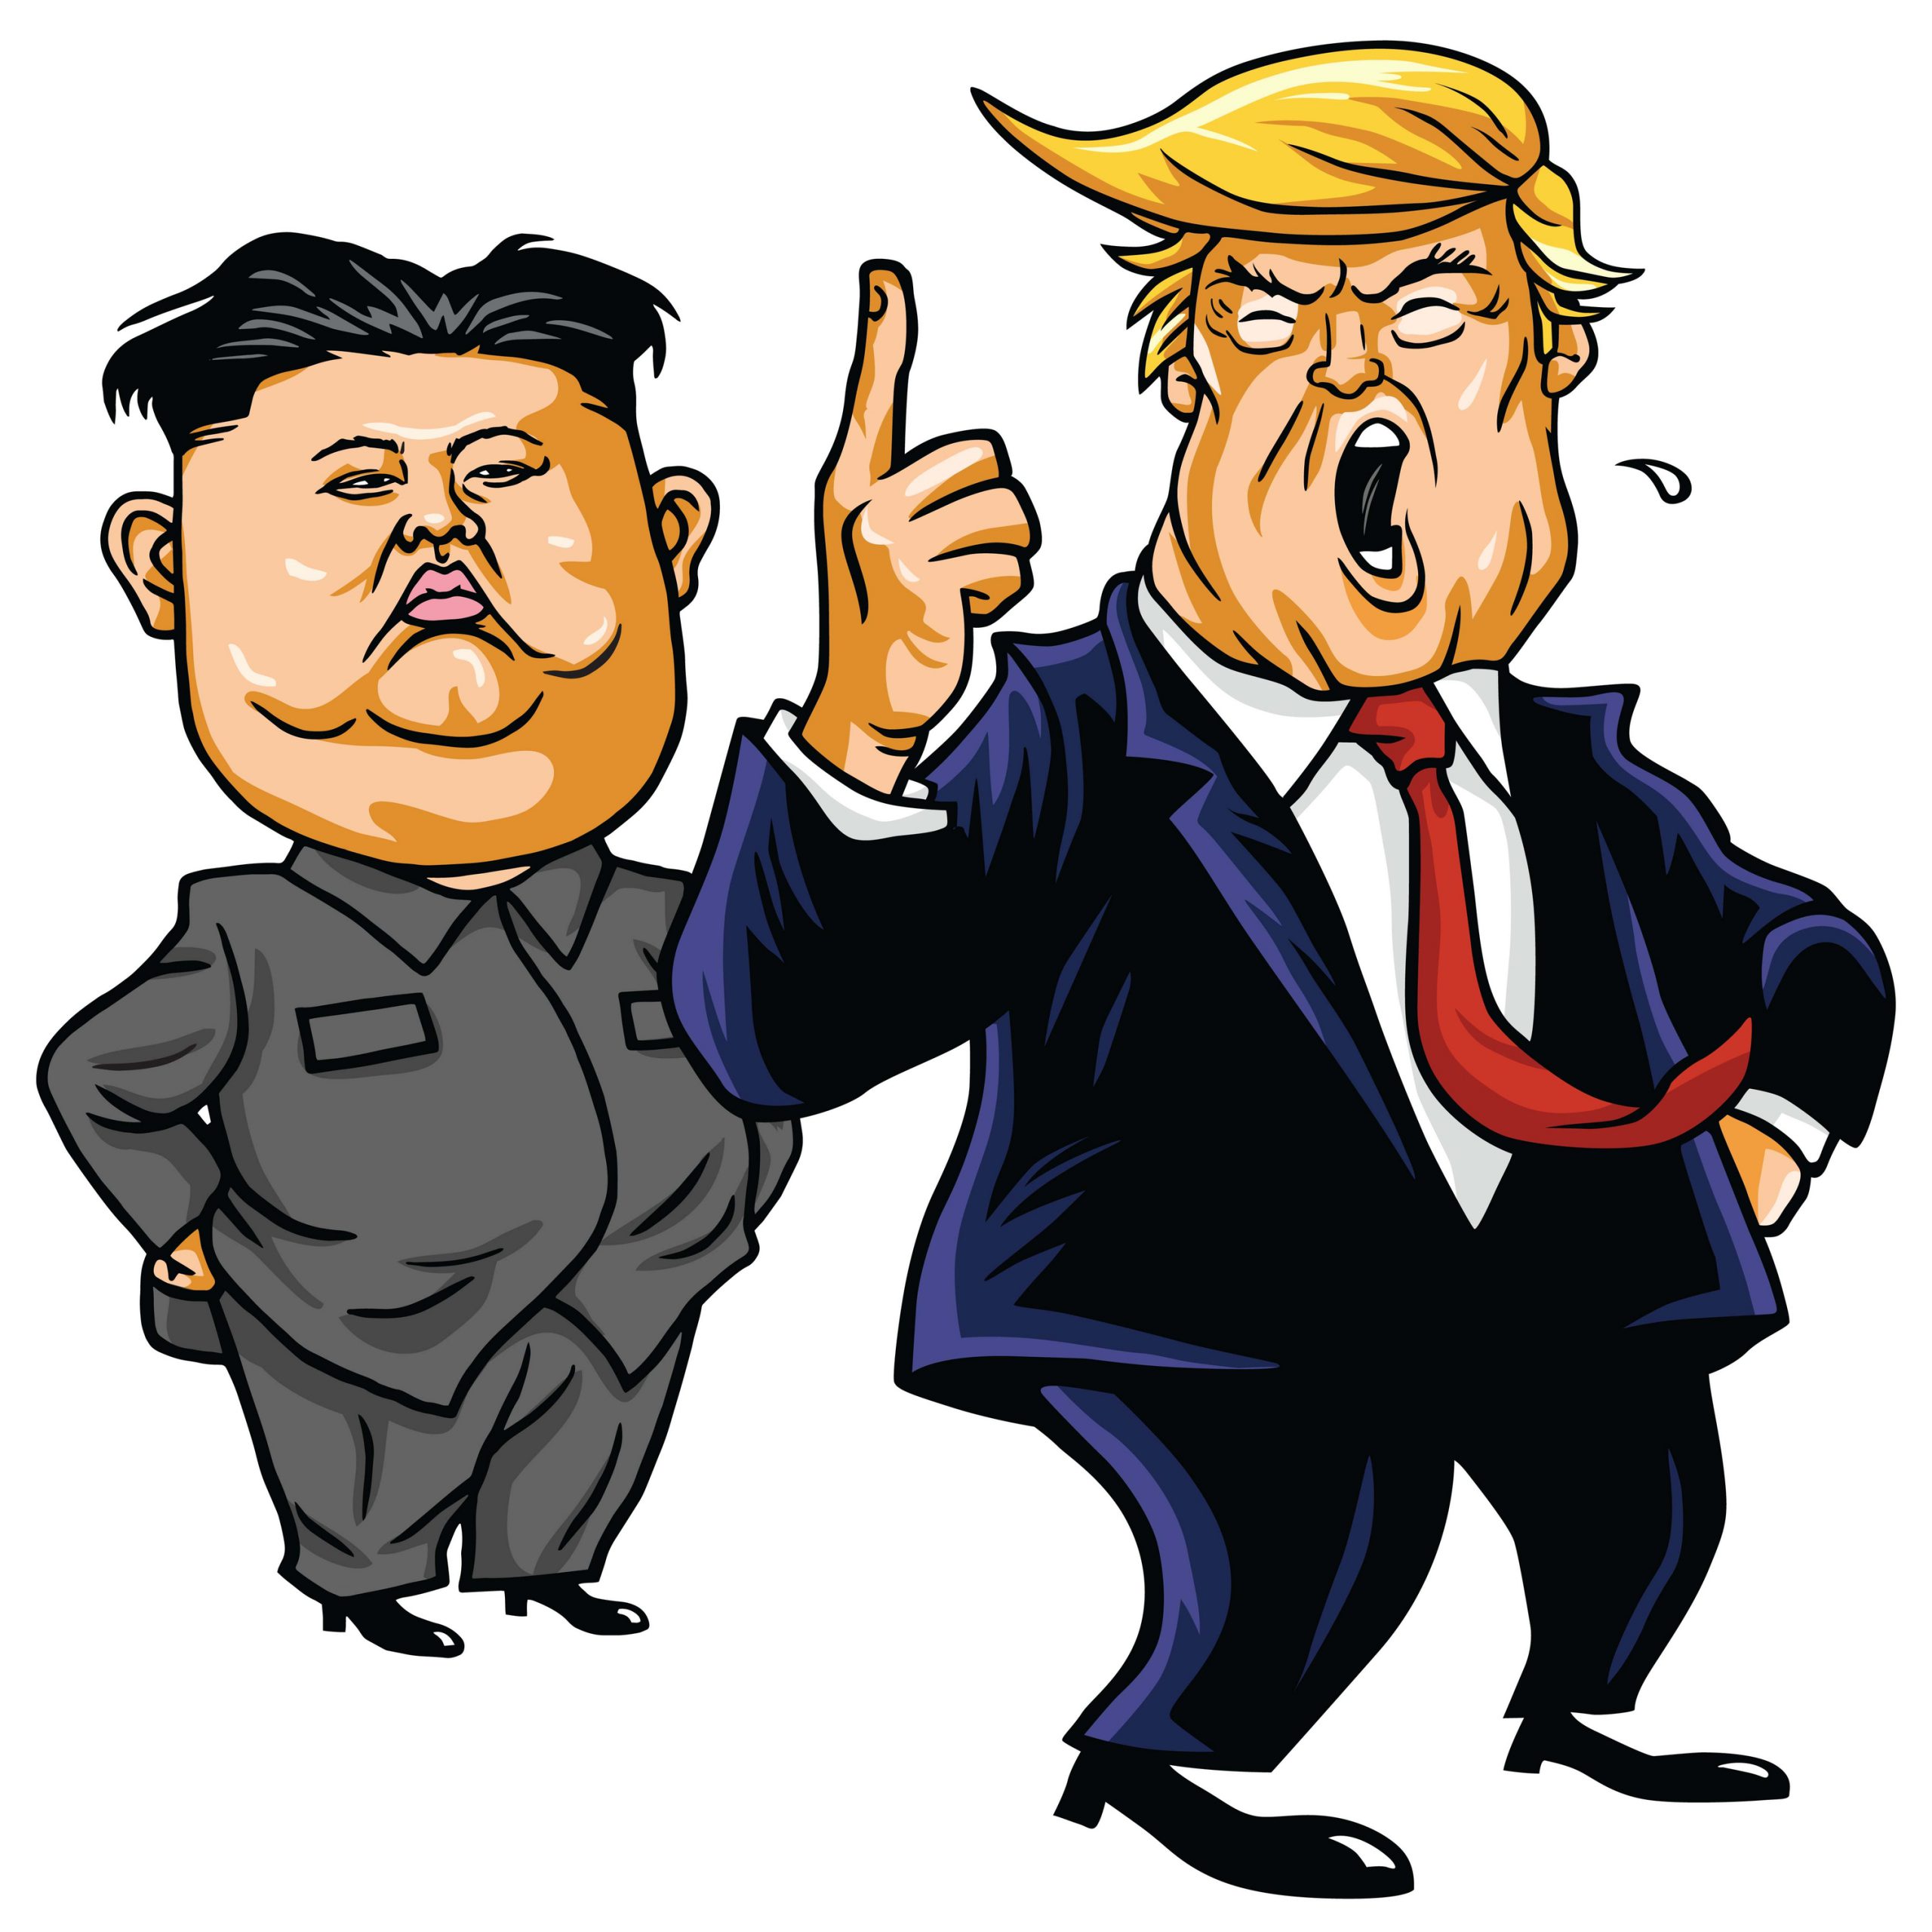 BS_Trump-N-Korea_Doddis_183521605